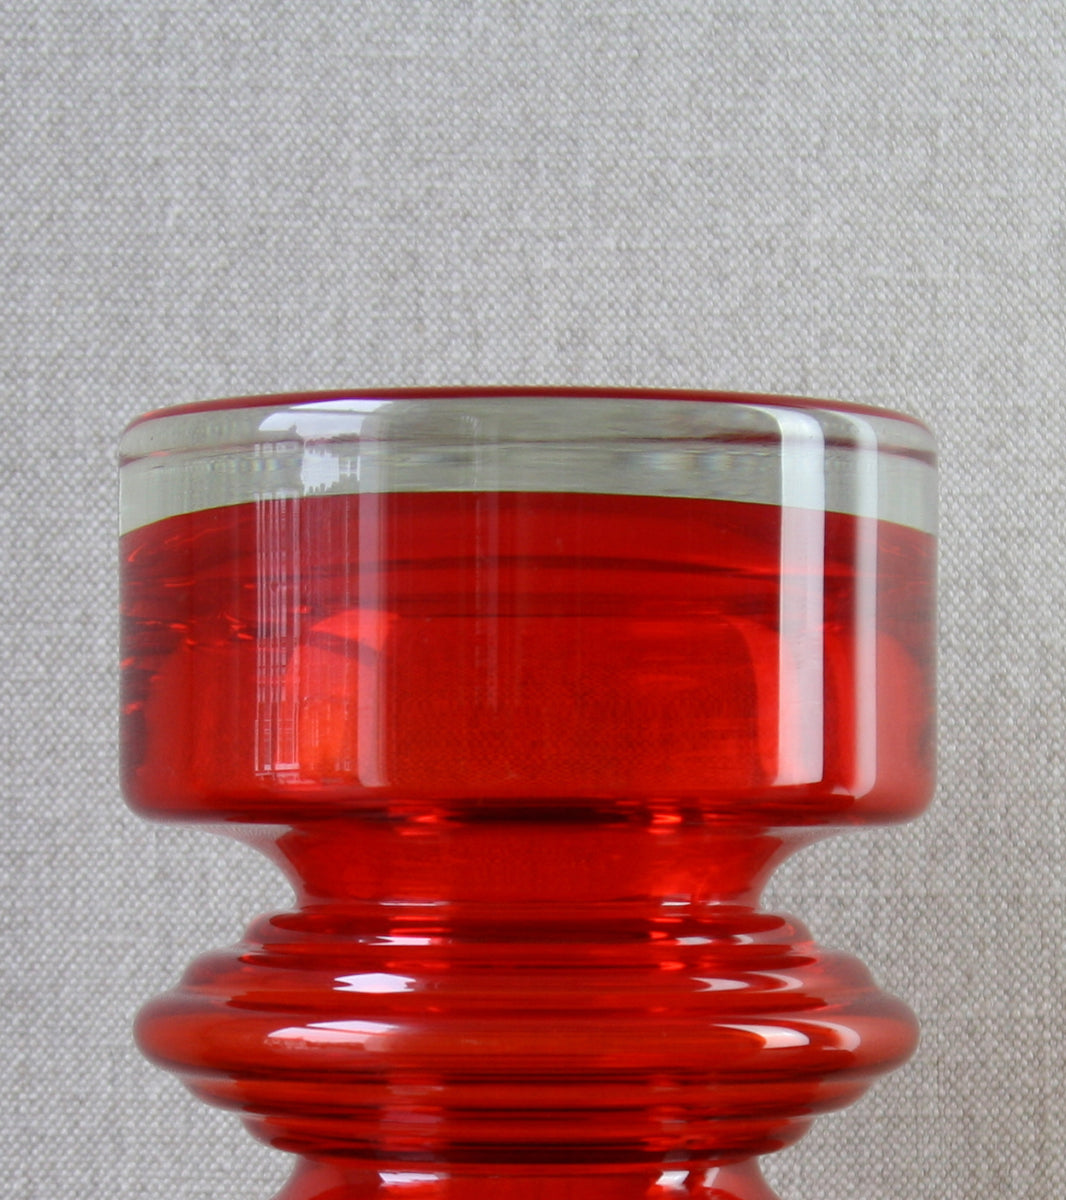 Ruby Red Model 1442 "Tiimalasi" (Hourglass) Vase / Nanny Still, 1970